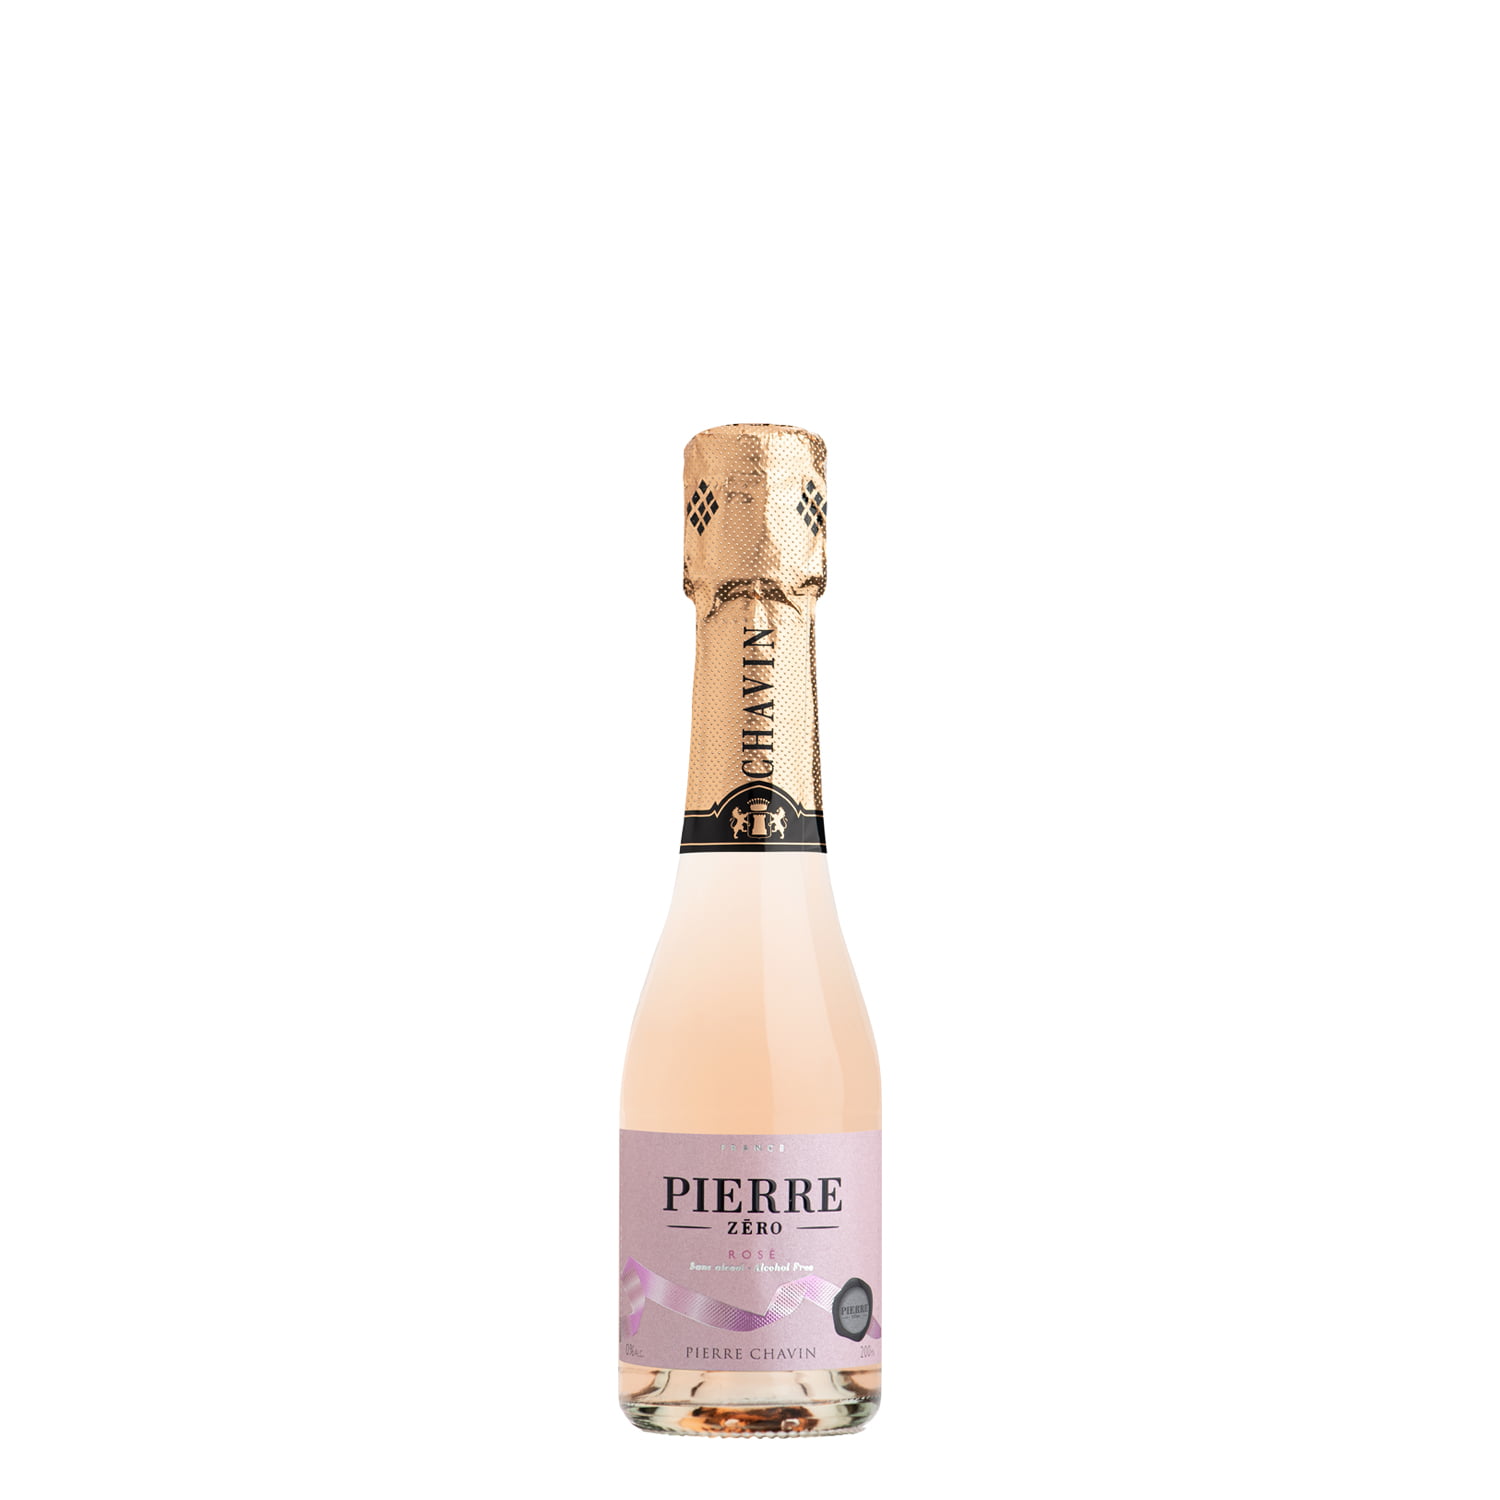 Pierre Zero Rose Sparkling Non-Alcoholic Sparkling Rose Wine 200ml 